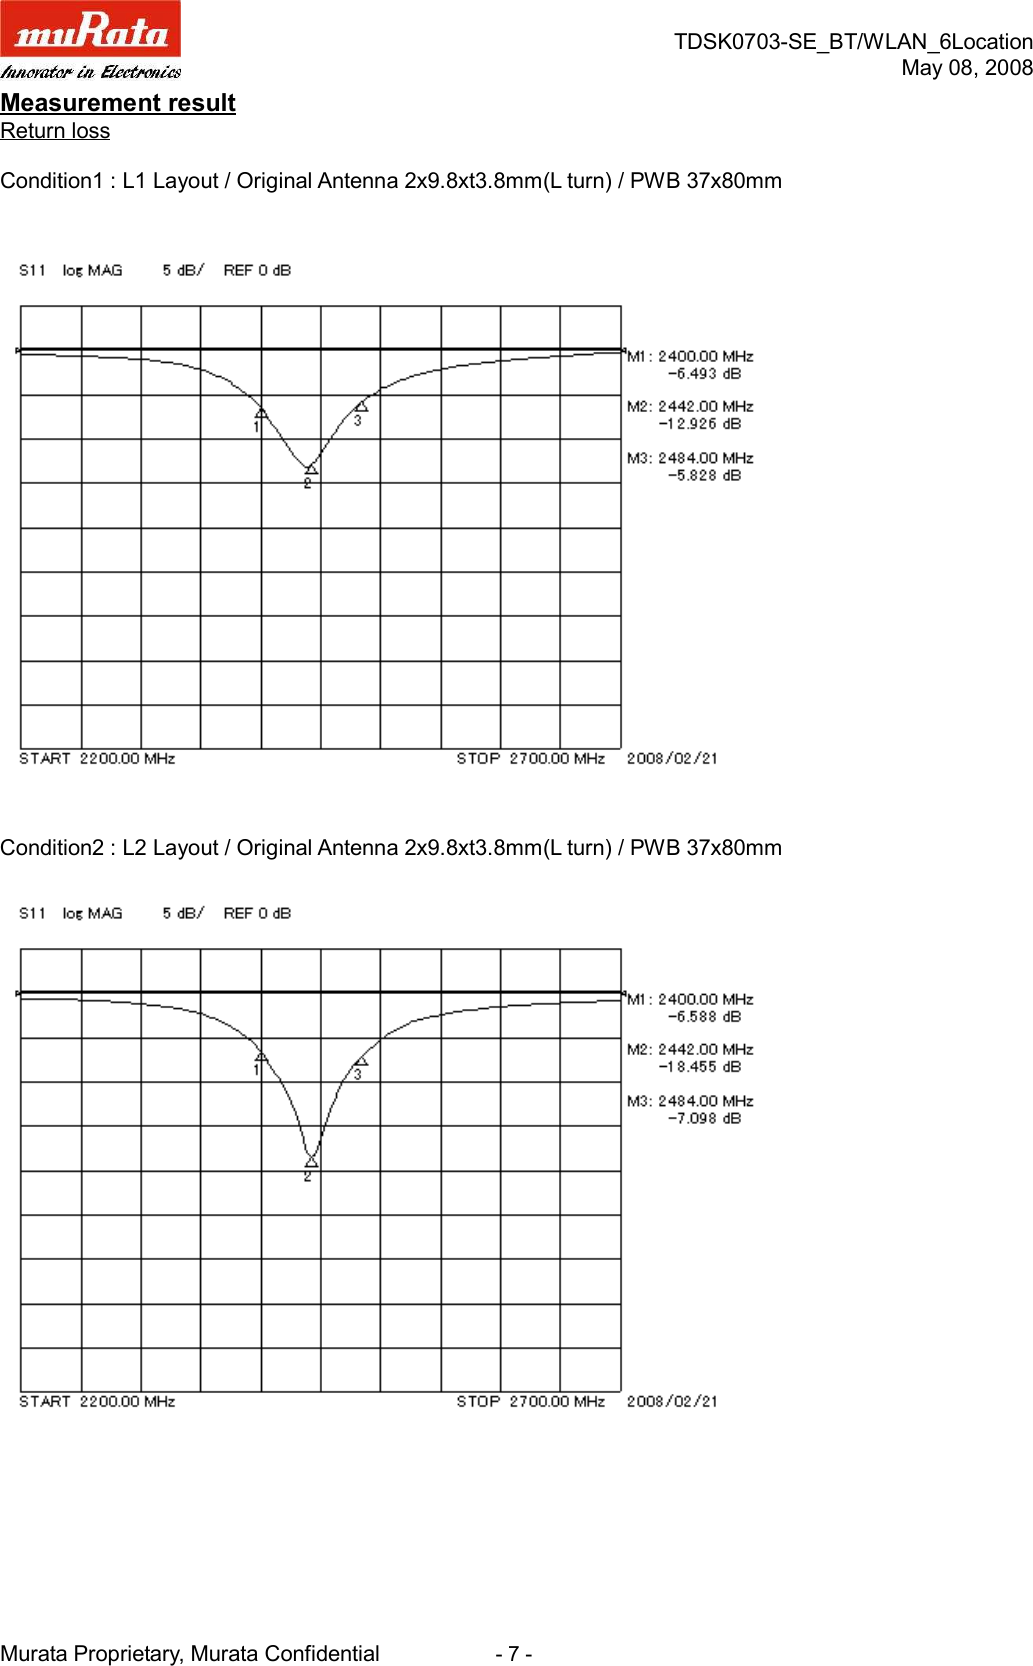 TDSK0703-SE_BT/WLAN_6LocationMay 08, 2008Murata Proprietary, Murata Confidential                      - 7 -Measurement resultReturn lossCondition1 : L1 Layout / Original Antenna 2x9.8xt3.8mm(L turn) / PWB 37x80mmCondition2 : L2 Layout / Original Antenna 2x9.8xt3.8mm(L turn) / PWB 37x80mm